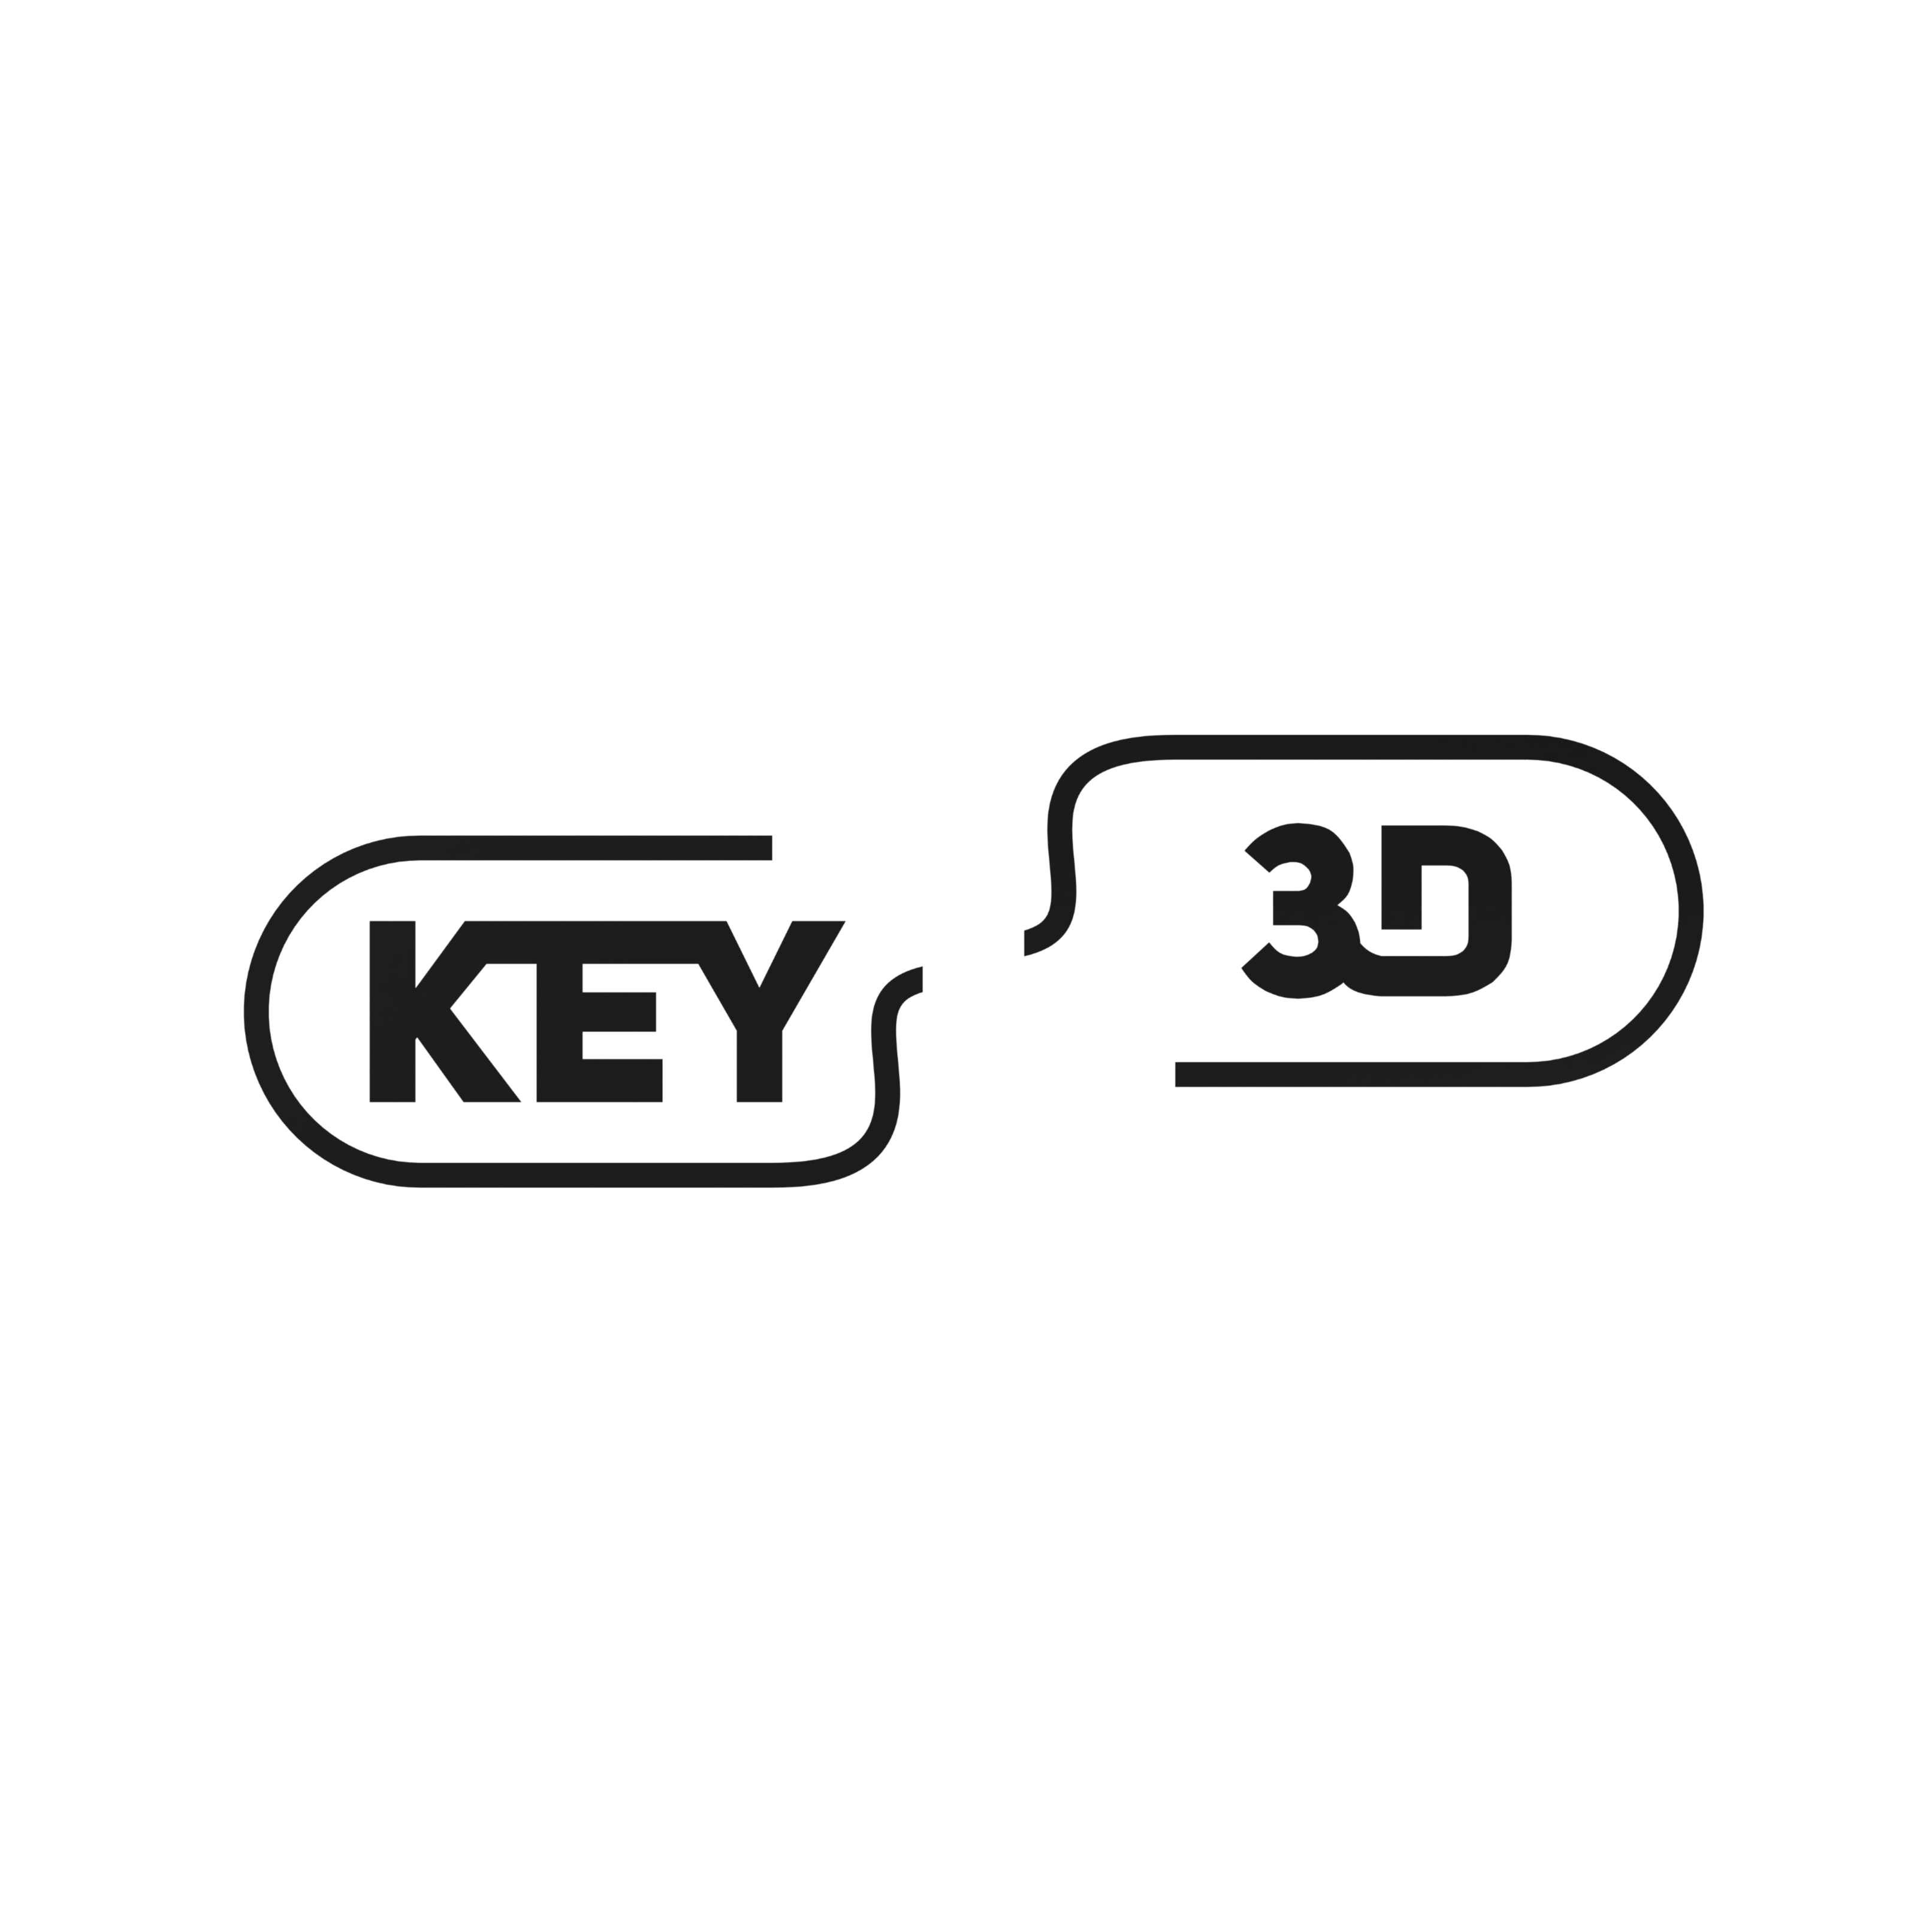 key3Dchain Media